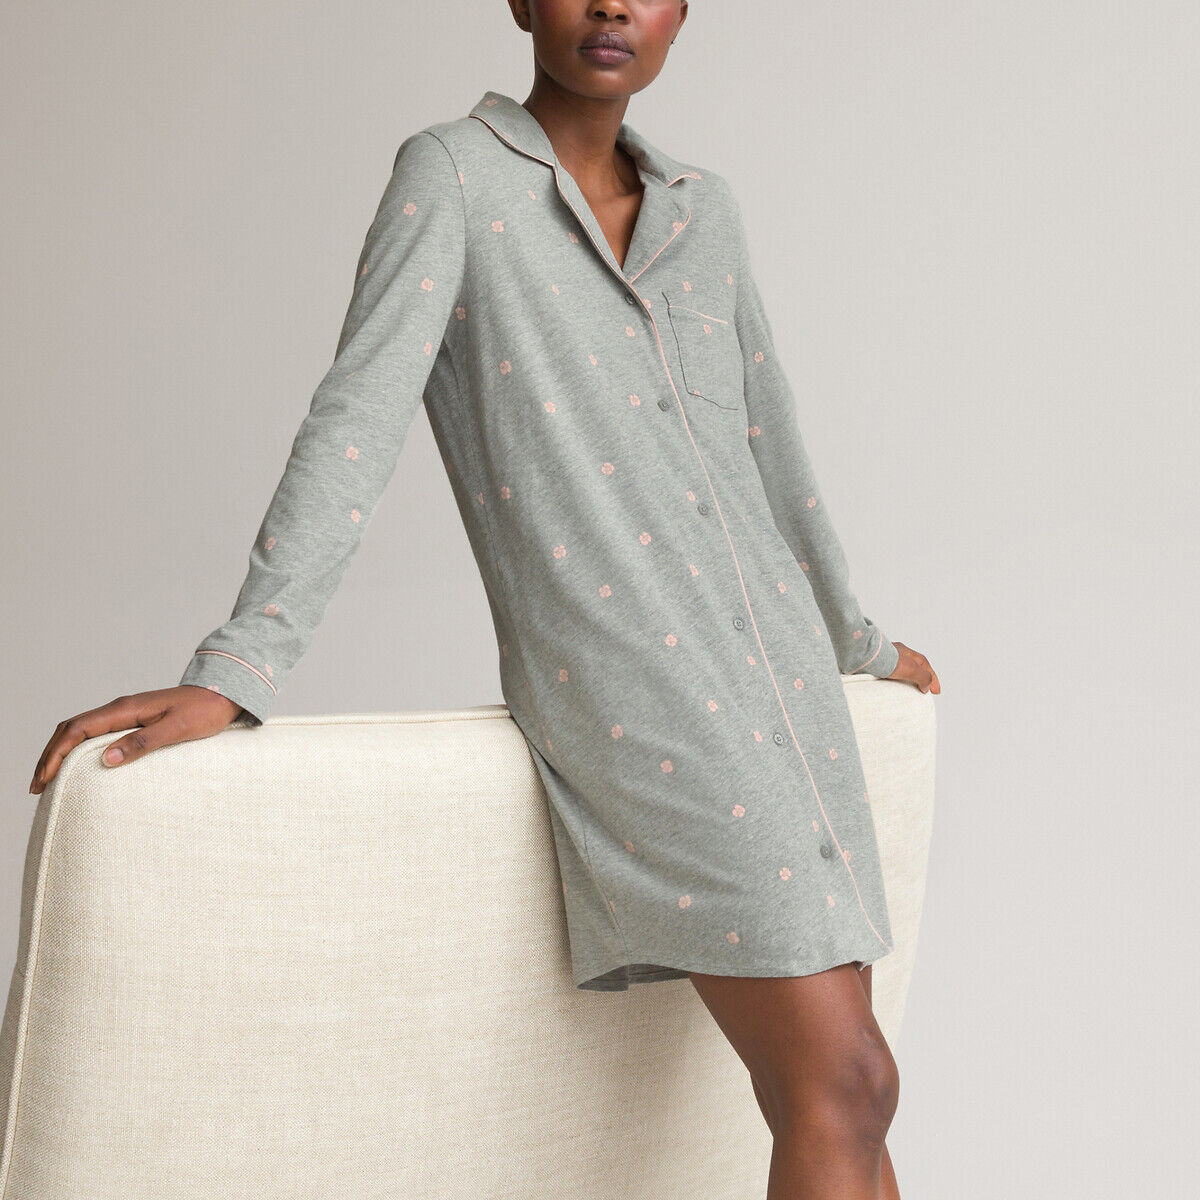 LA REDOUTE COLLECTIONS Nachthemd im klassischen Pyjama-Stil, bedruckt ANDERE